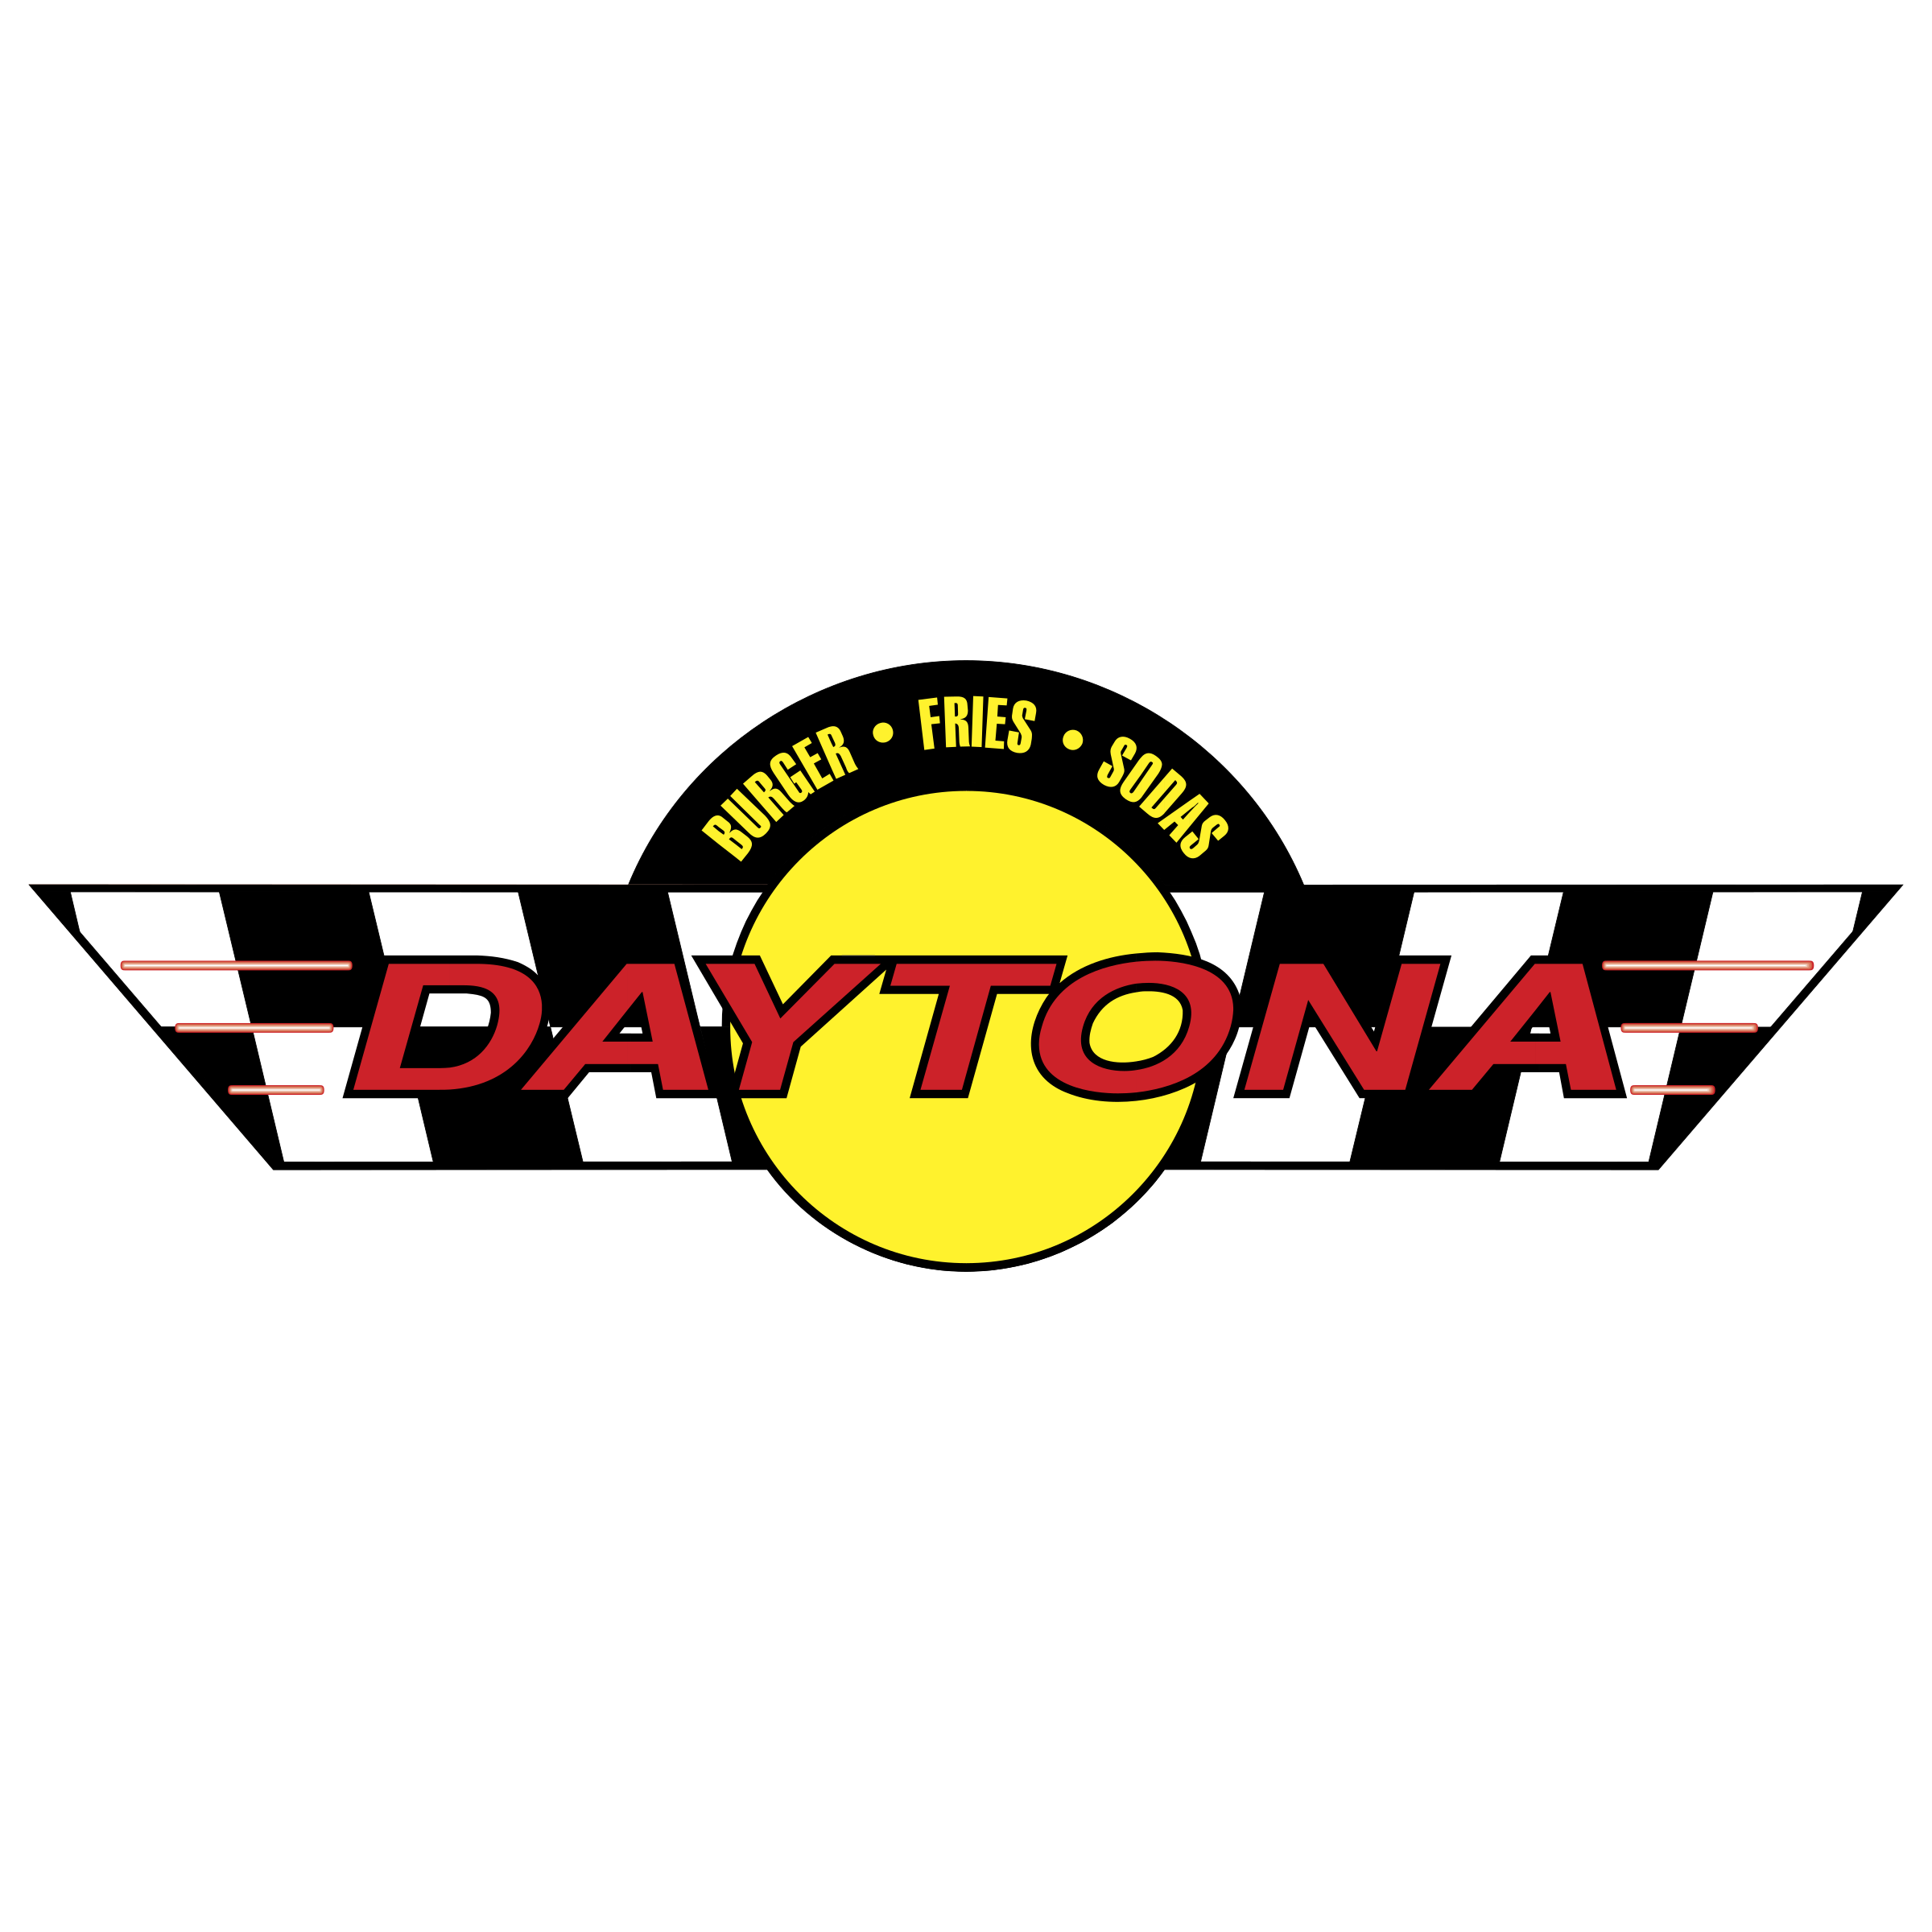 Daytona Logo PNG Transparent & SVG Vector.